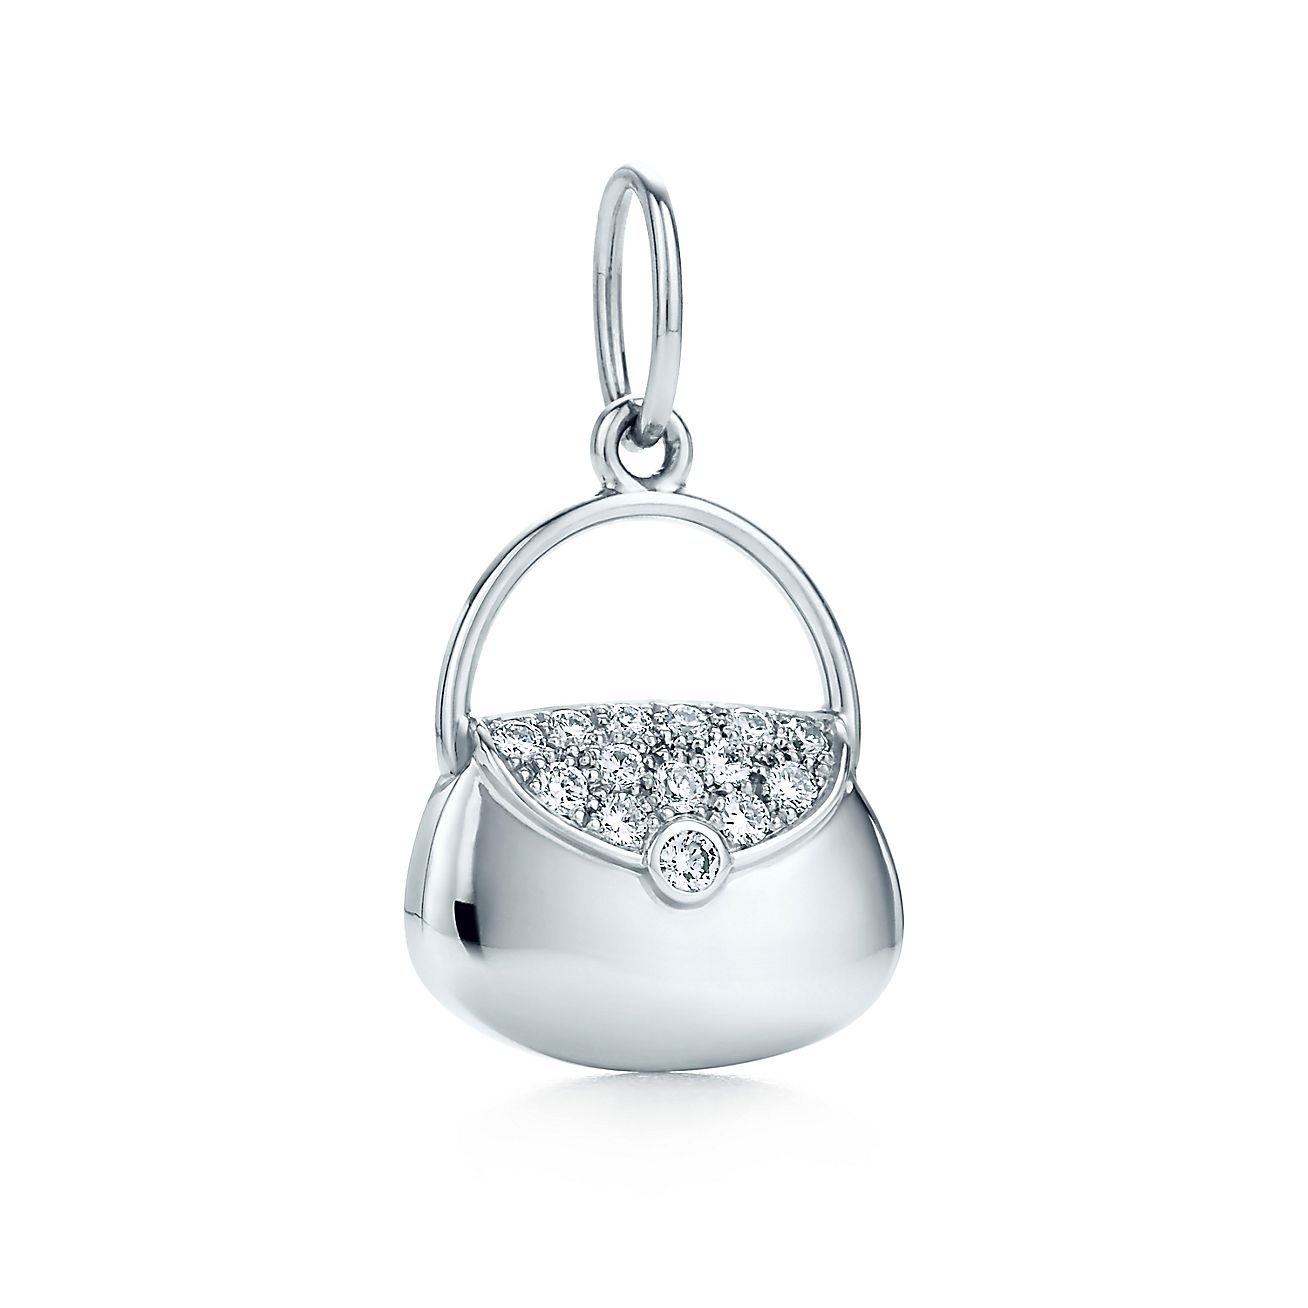 Handbag charm with diamonds in platinum, mini. | Tiffany & Co.